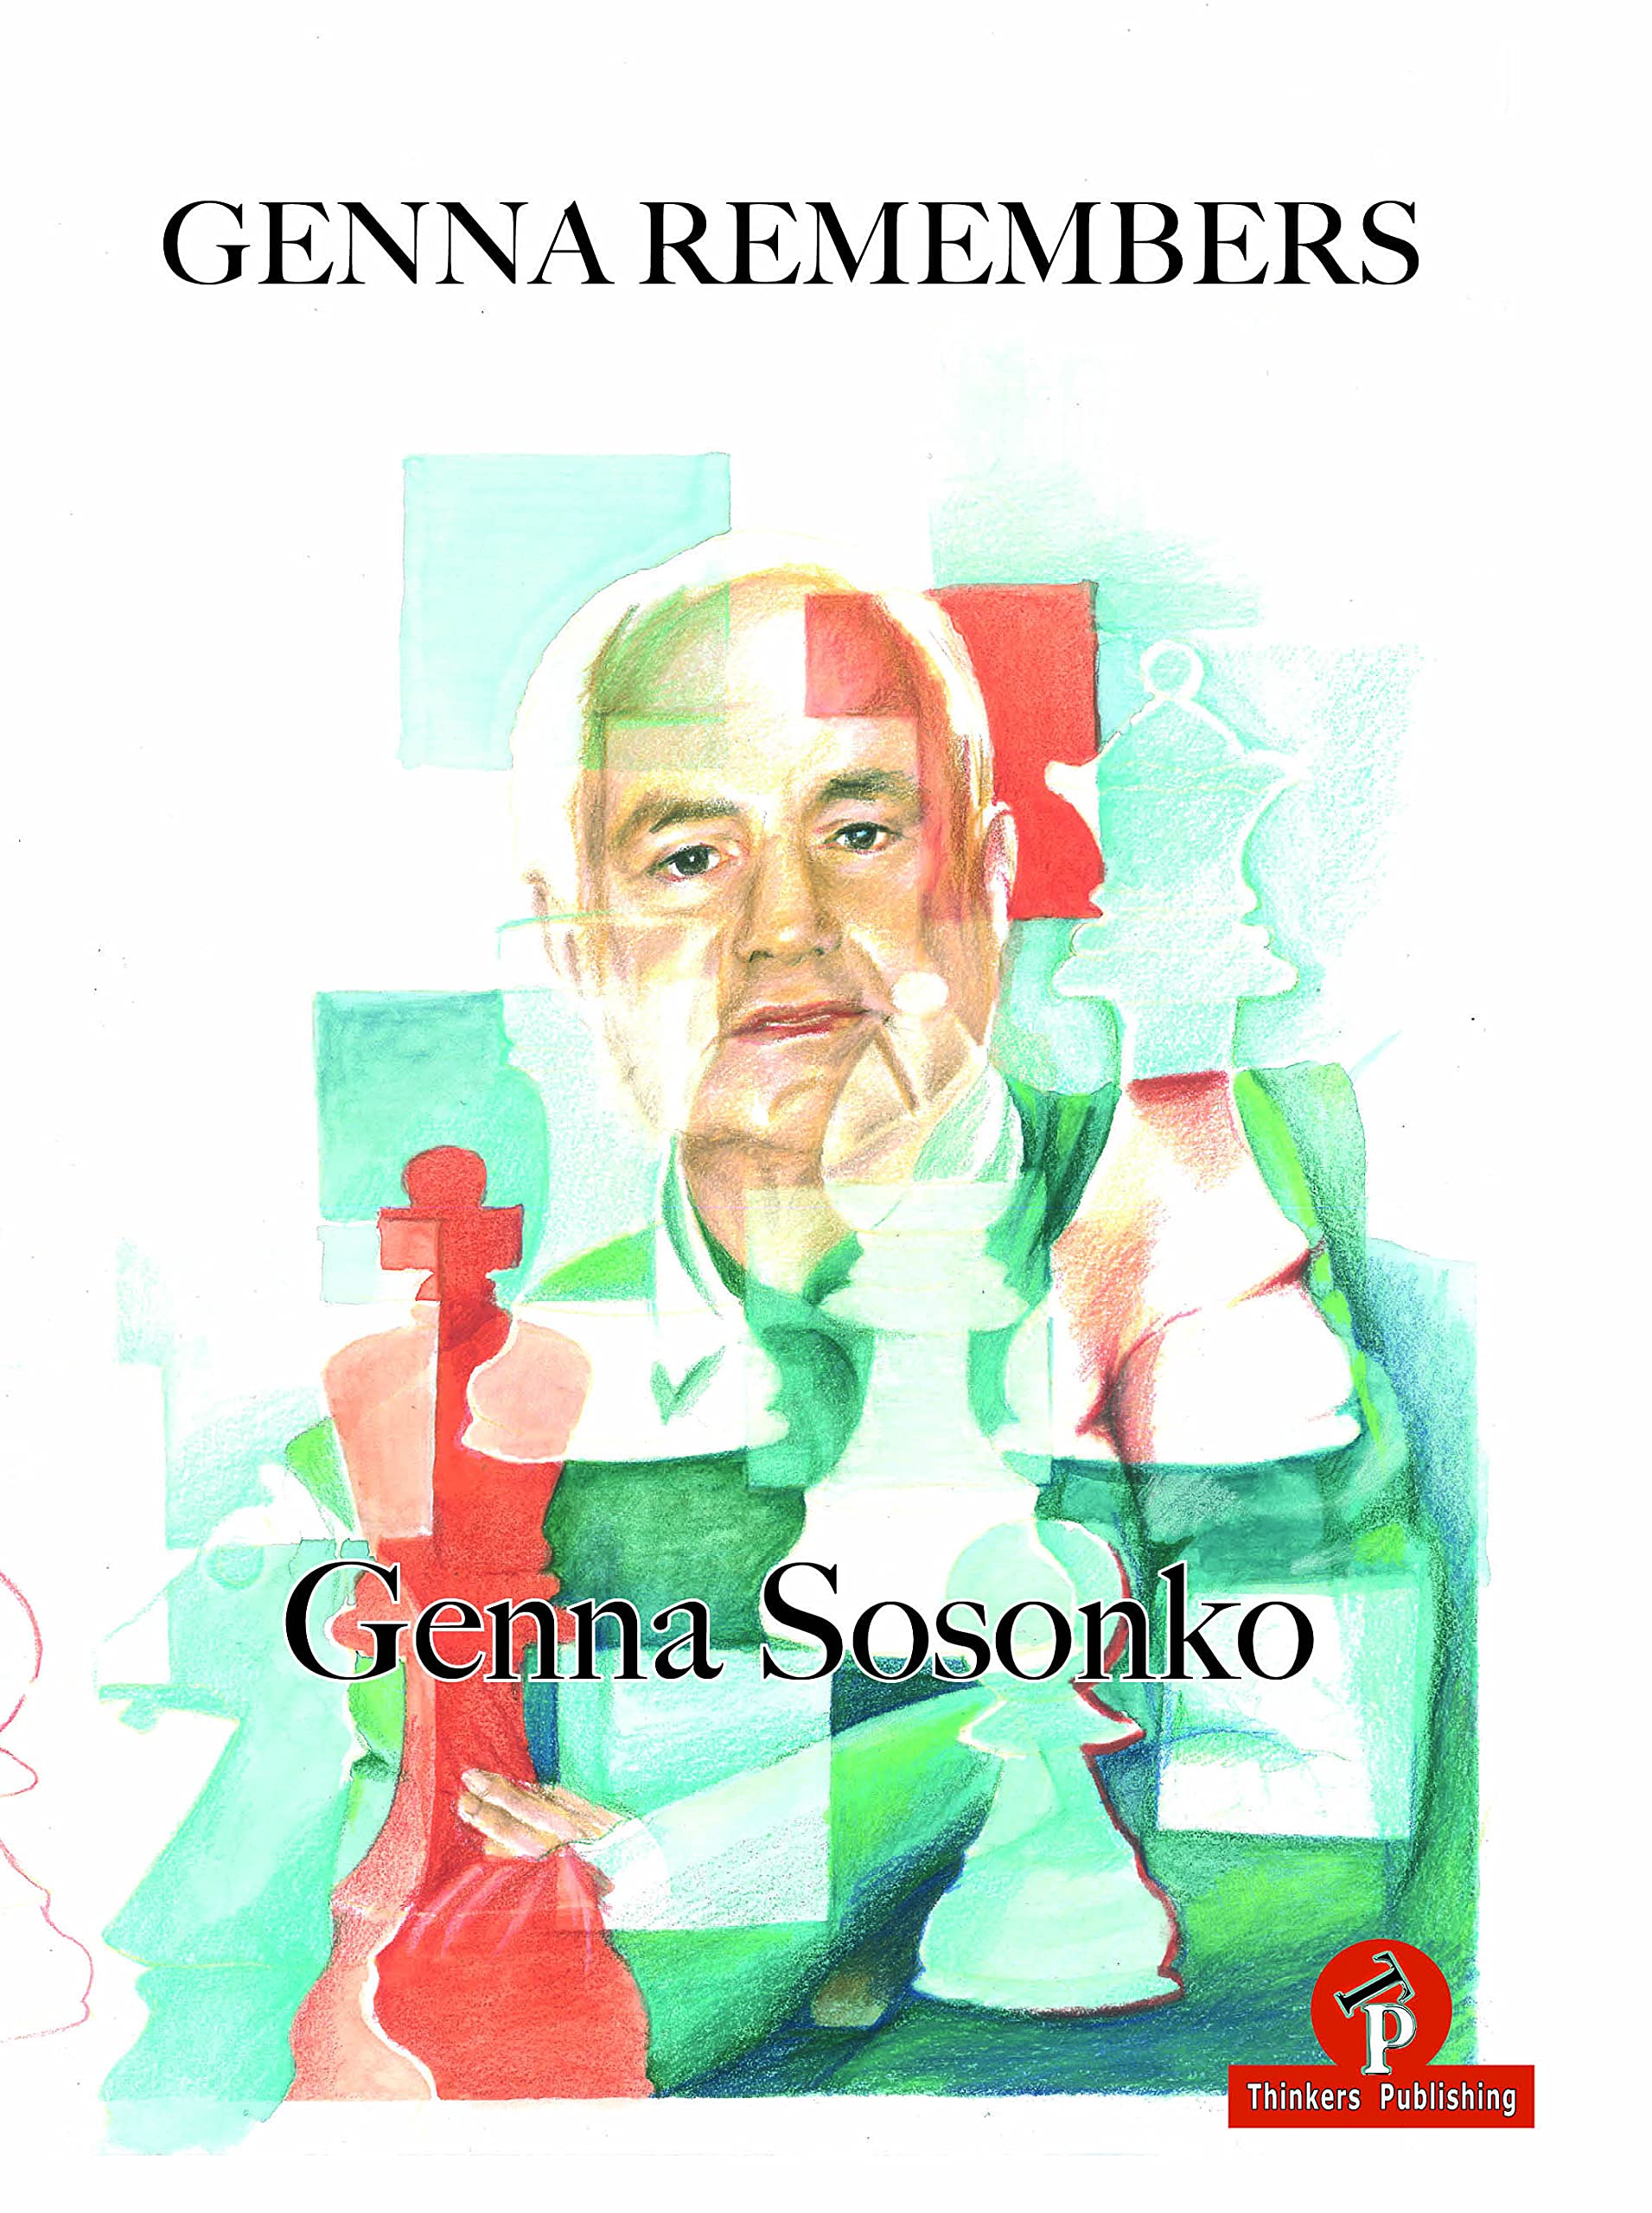 Genna Remembers, Genna Sosonko, Thinkers Publishing, 5th July 2021, ISBN-13 ‏ : ‎ 978-9464201192